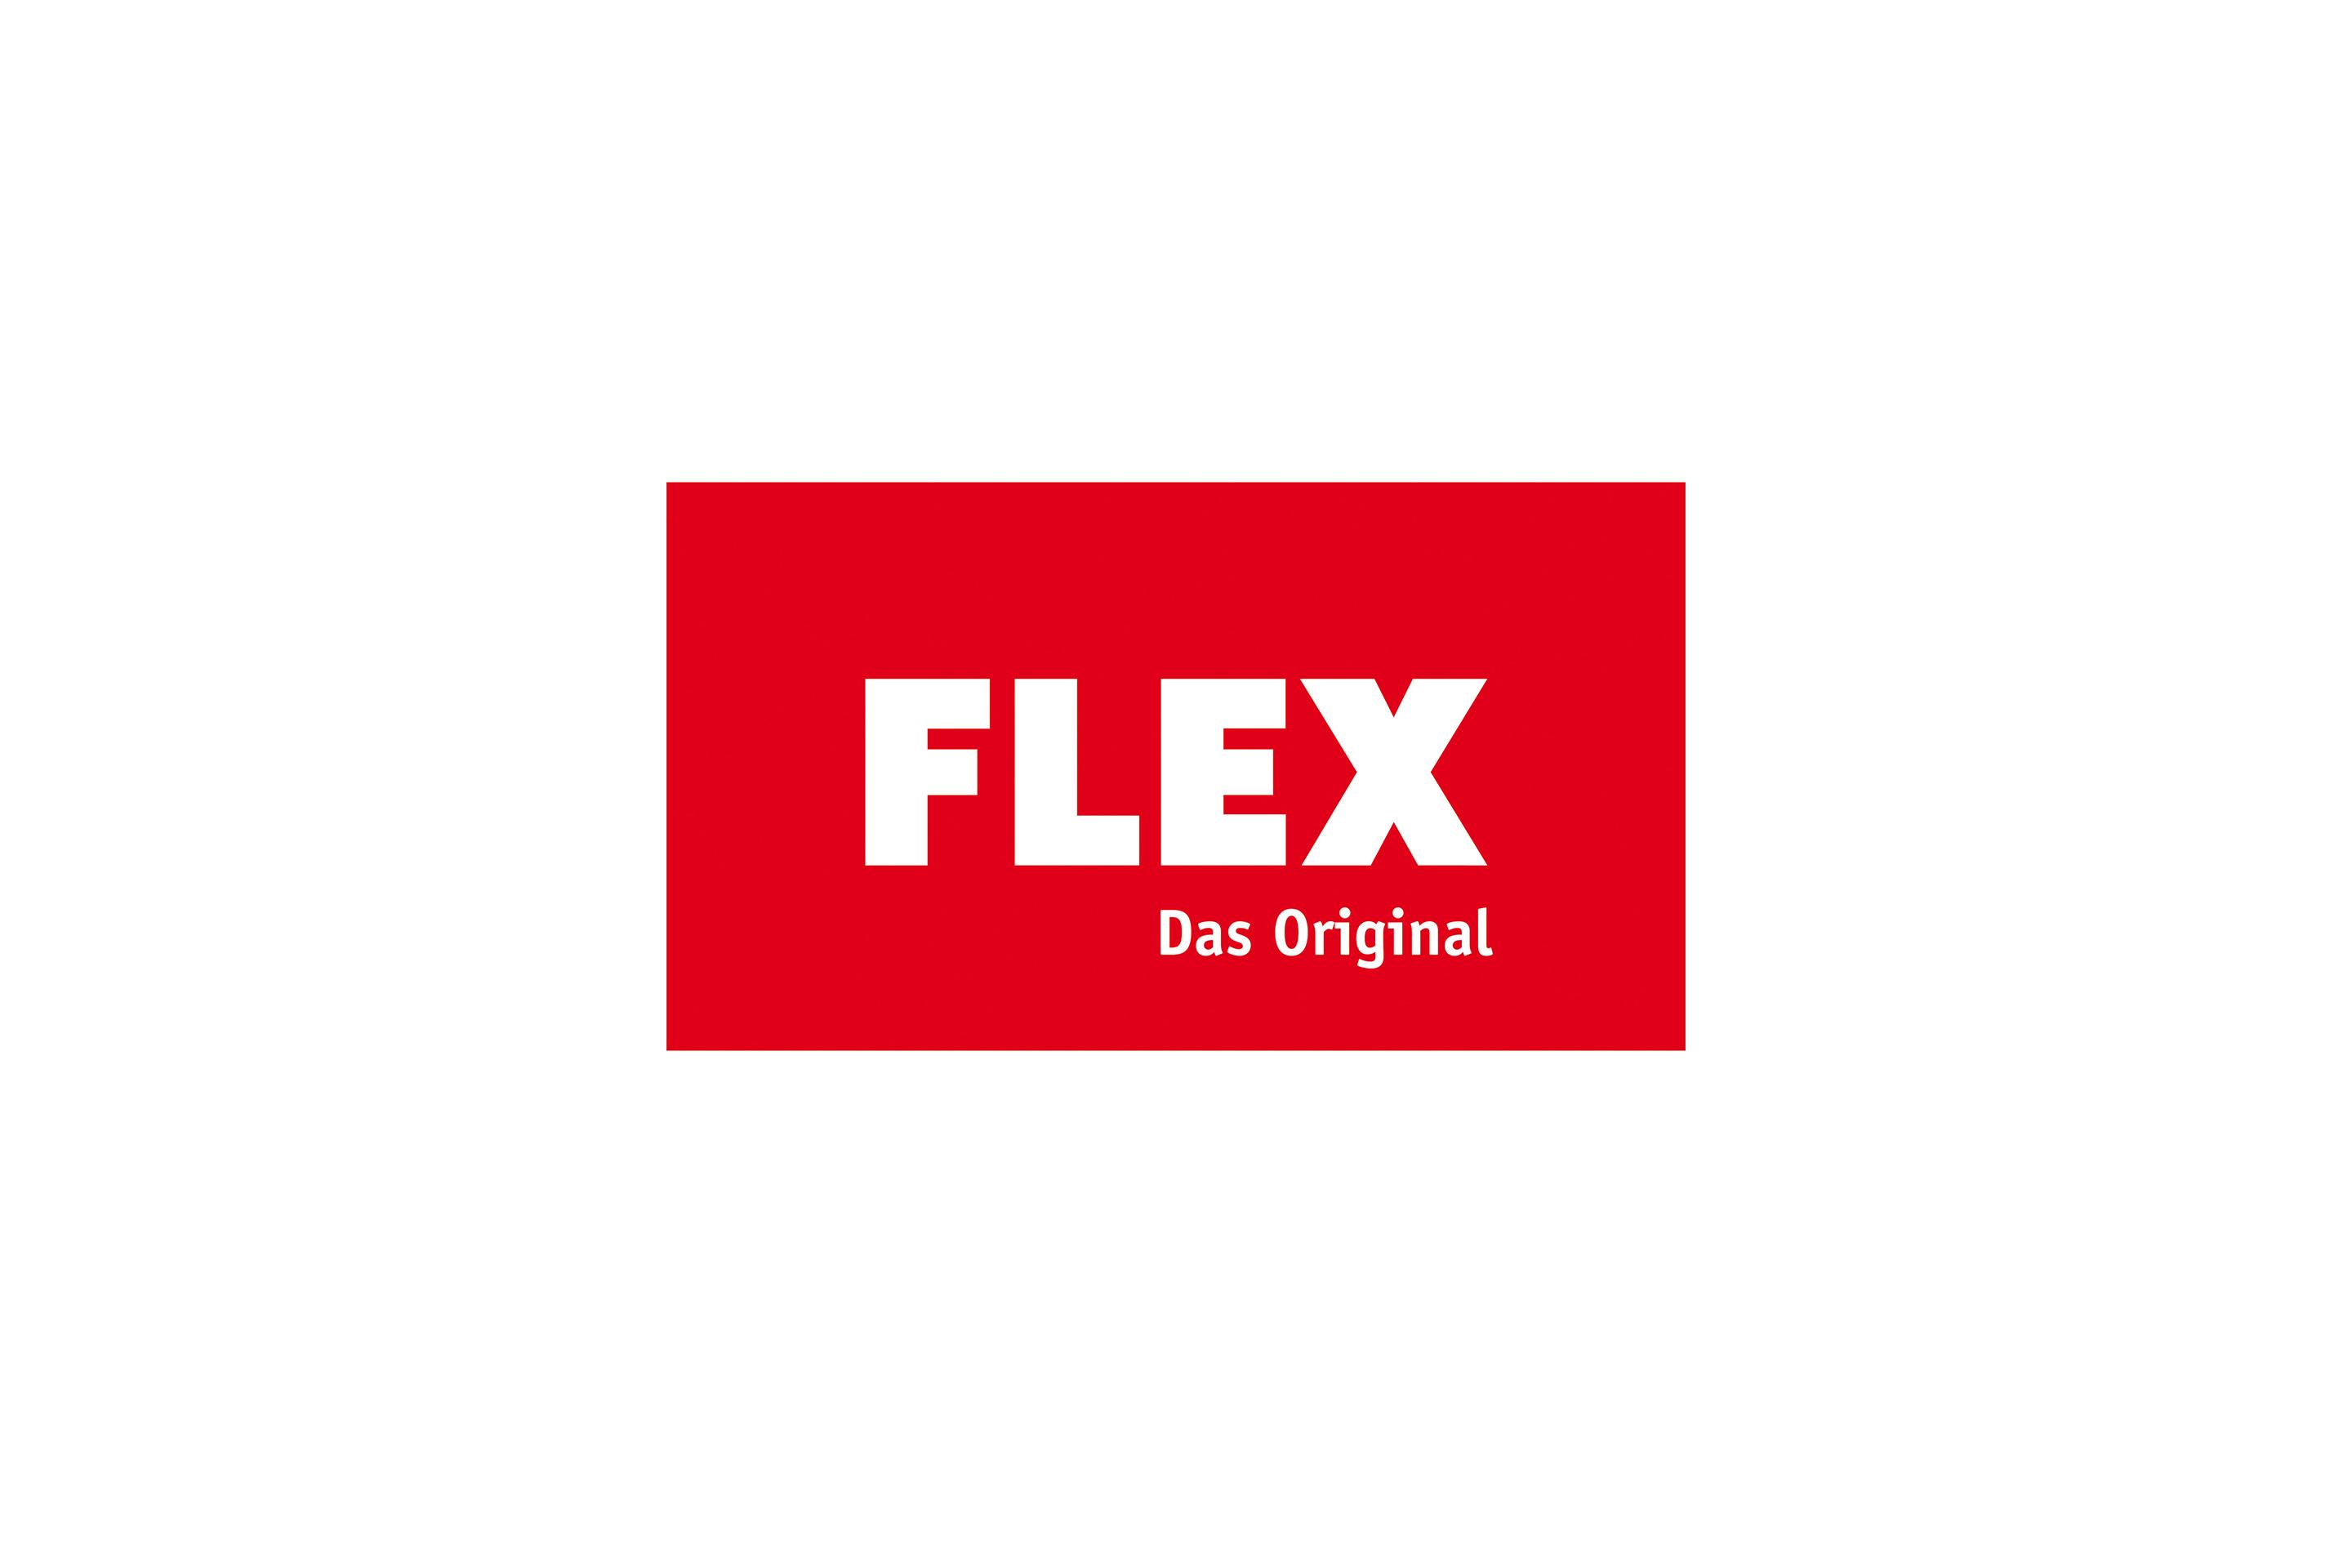 FLEX Le logo original de l’historique